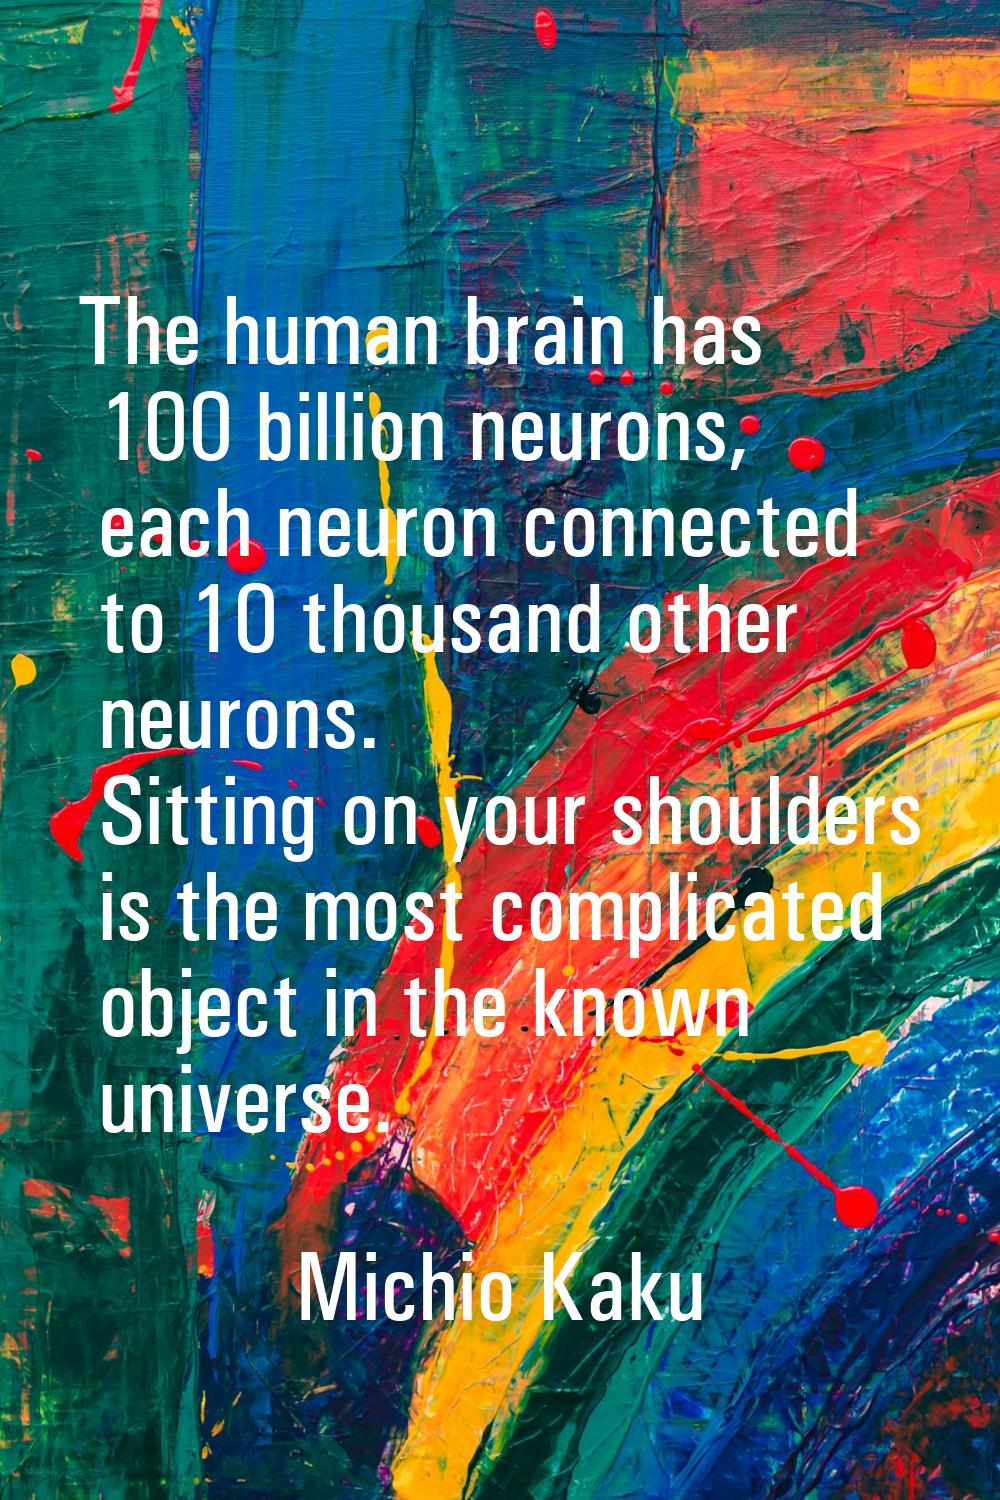 The human brain has 100 billion neurons, each neuron connected to 10 thousand other neurons. Sittin